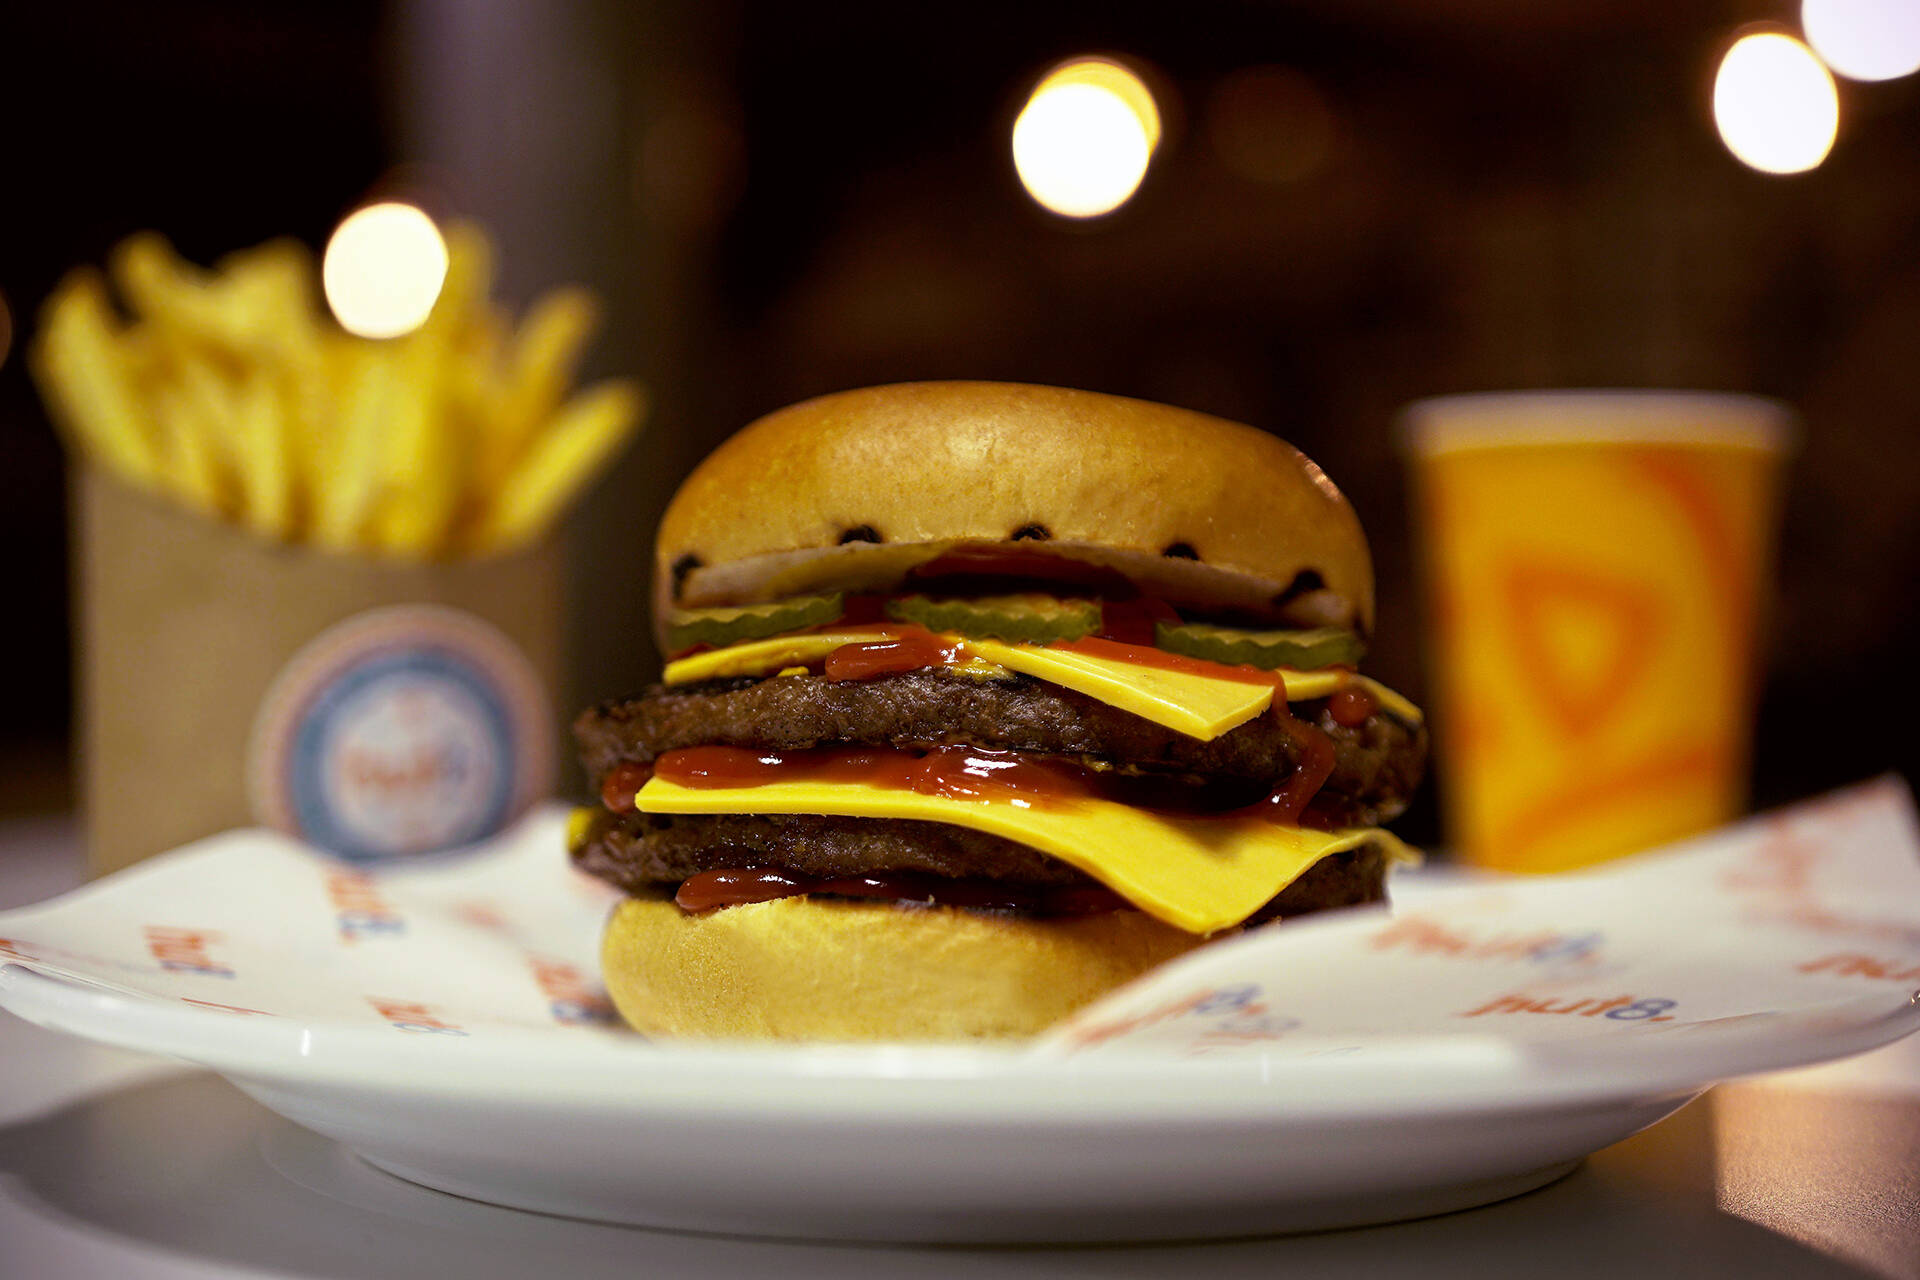 A cheeseburger from Hut 8